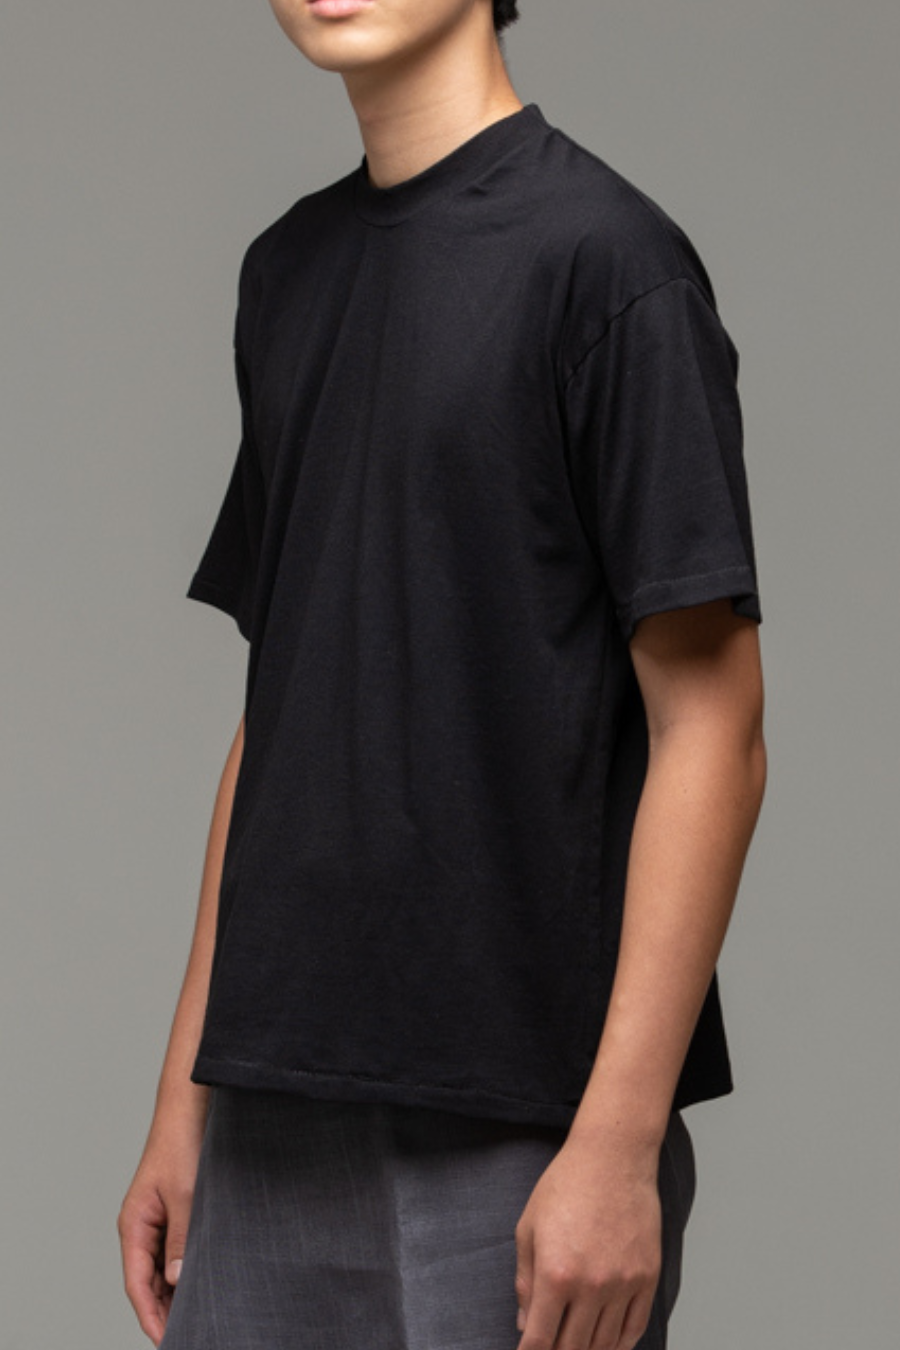 Chasu T-shirt (Black)